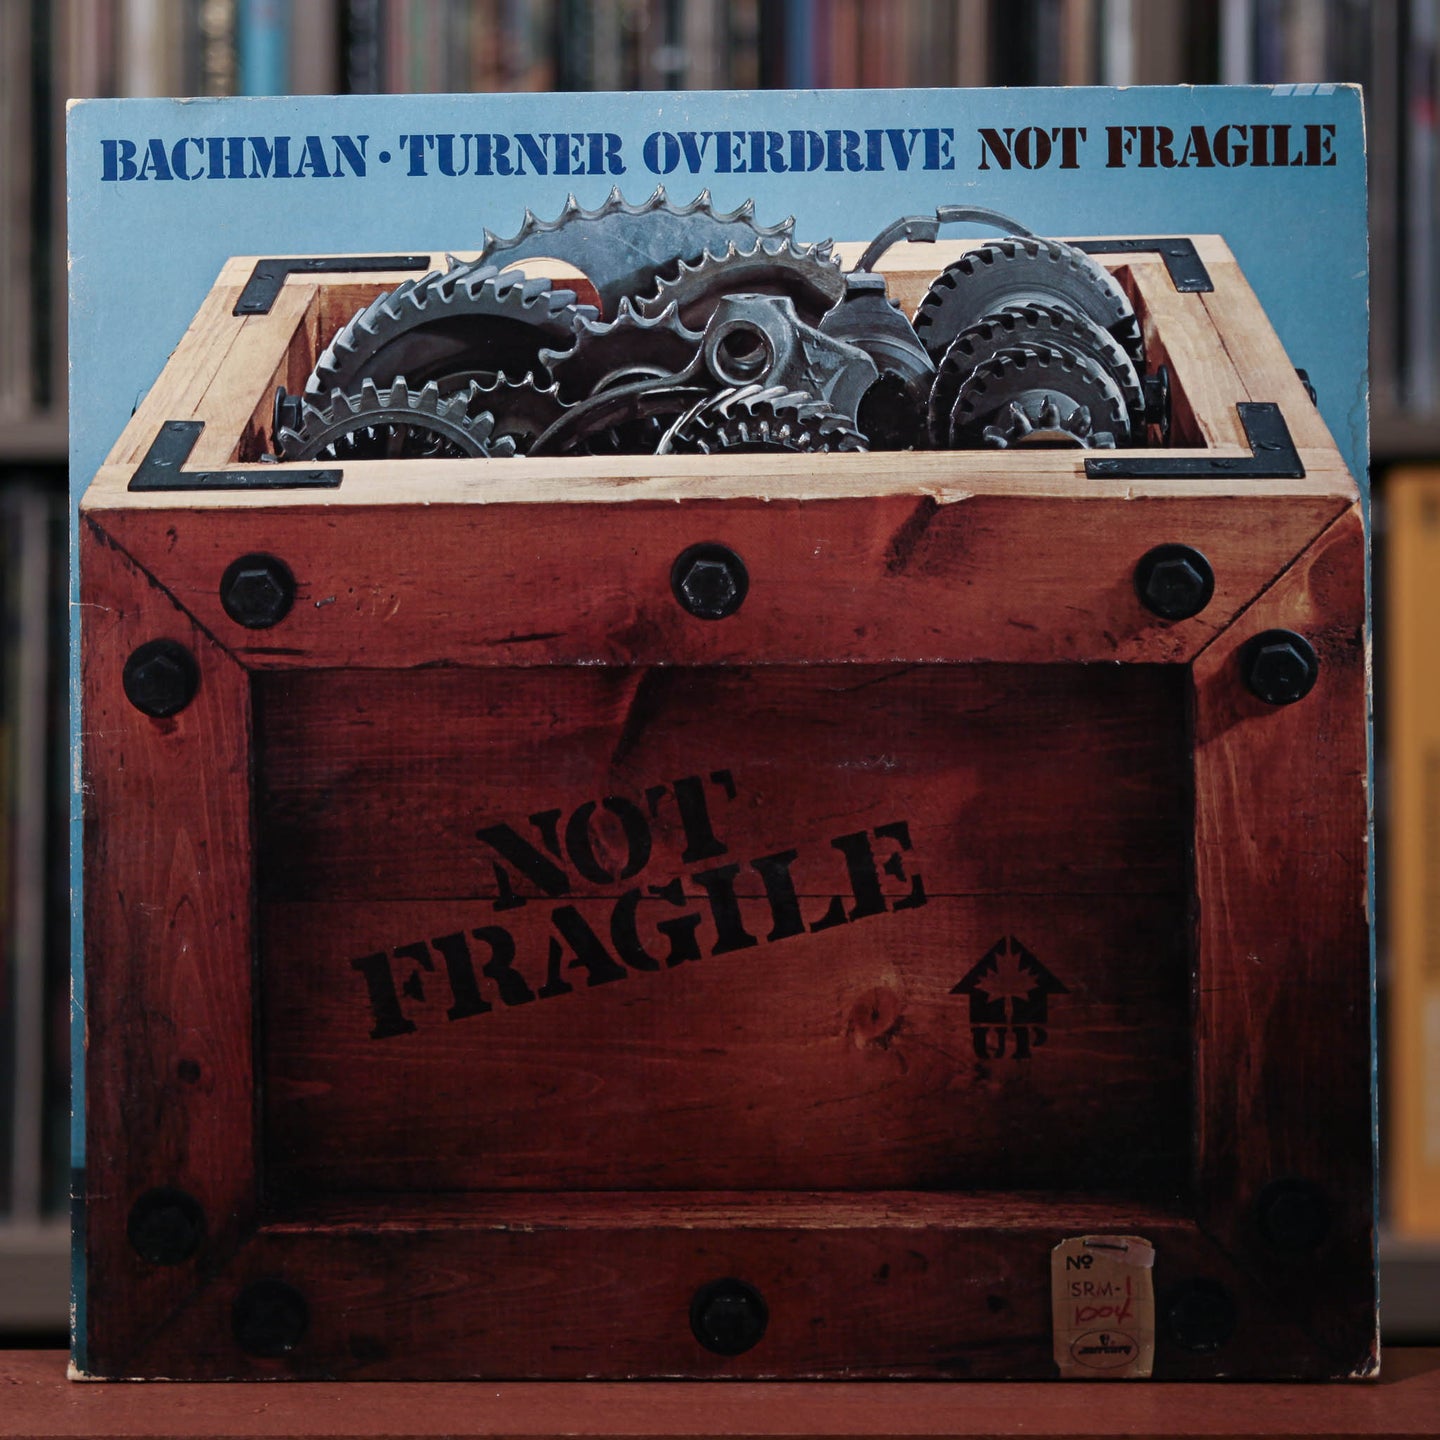 BTO - Not Fragile - 1974 Mercury, VG+/VG+